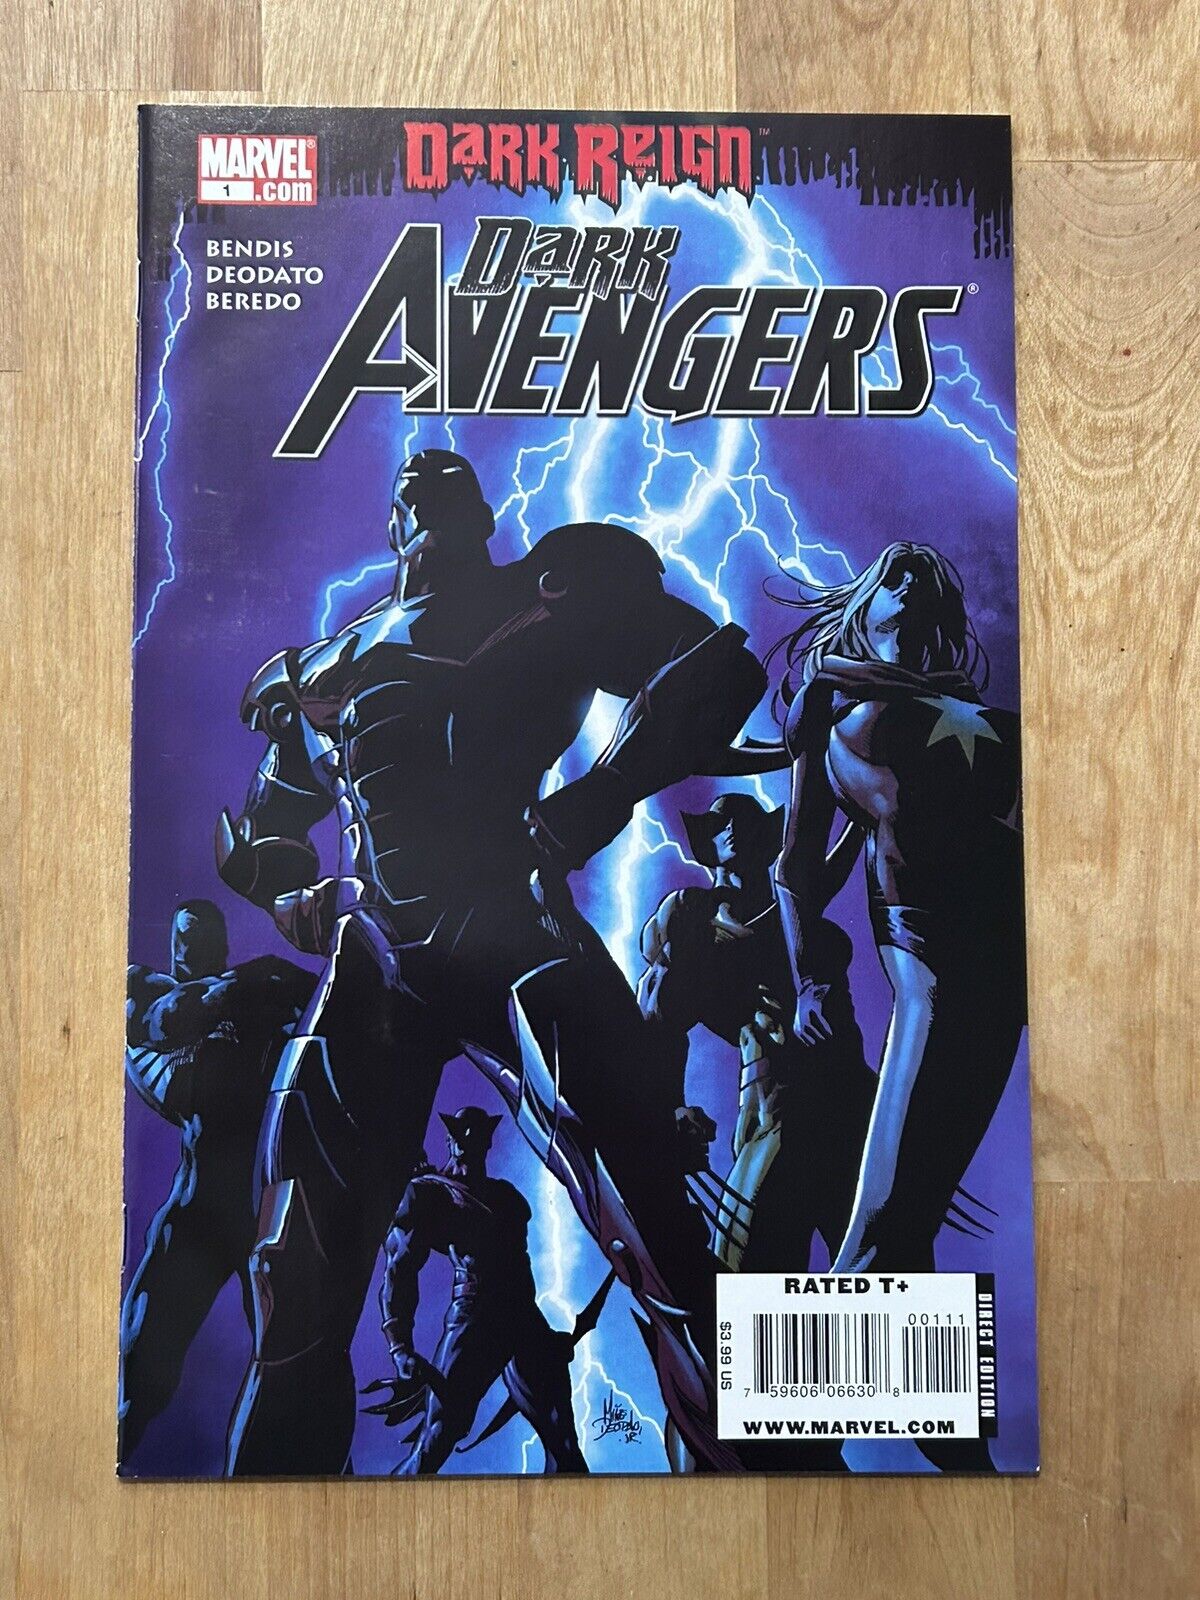 Dark Avengers #1 - VF/NM - 2009 - Marvel - Dark Reign - 1st Osborn/Iron Patriot